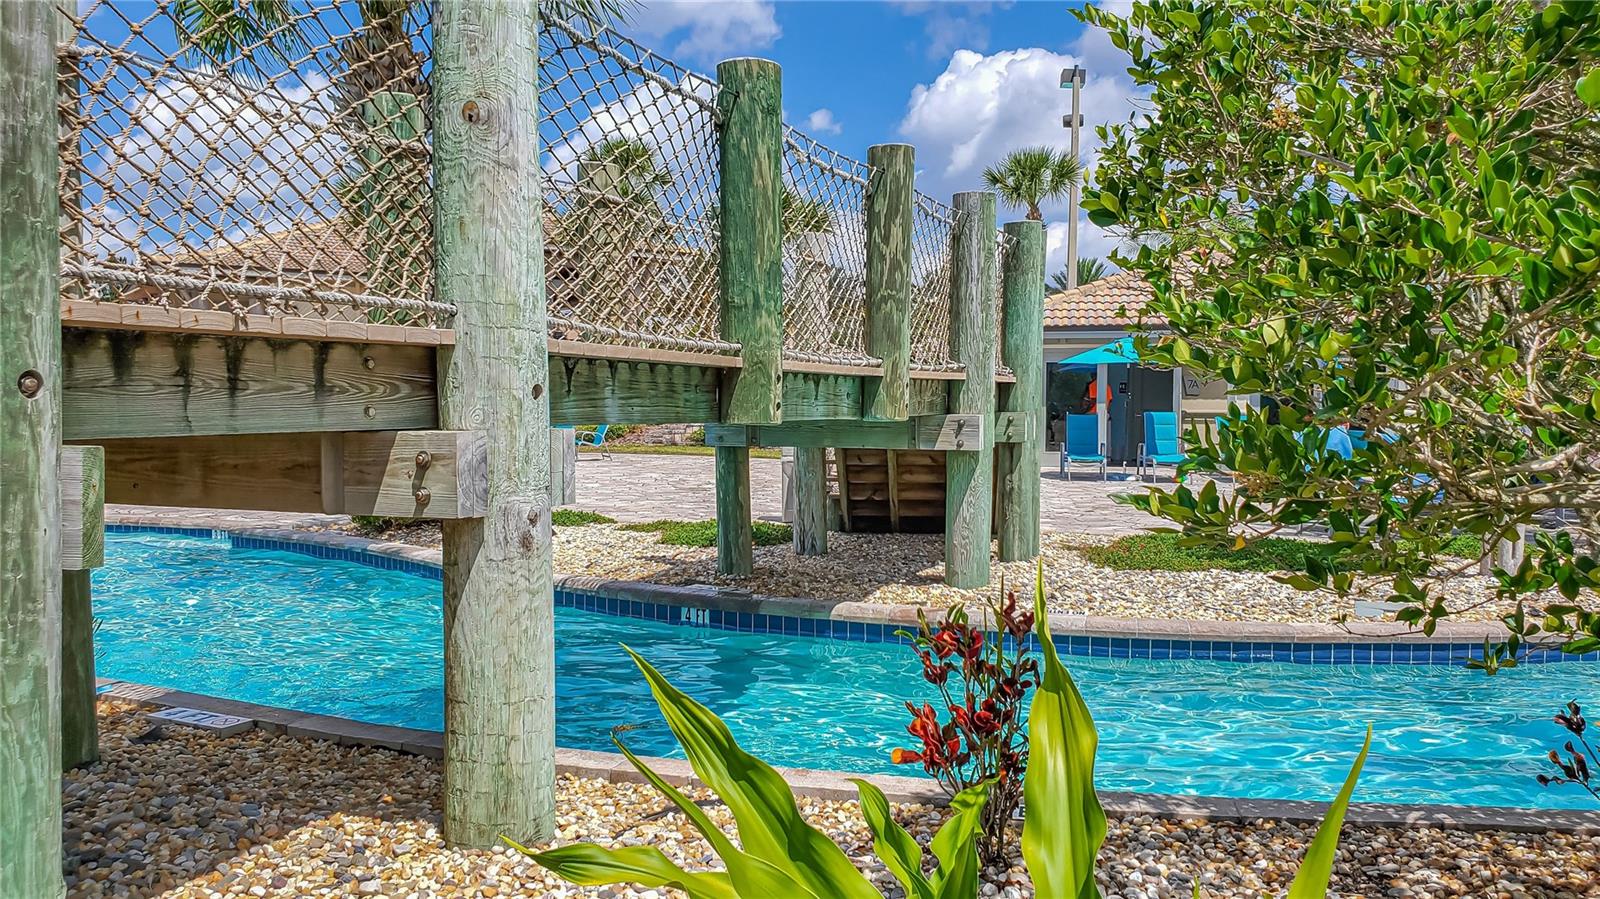 Slide show image of the Orlando Florida Home for Sale 49